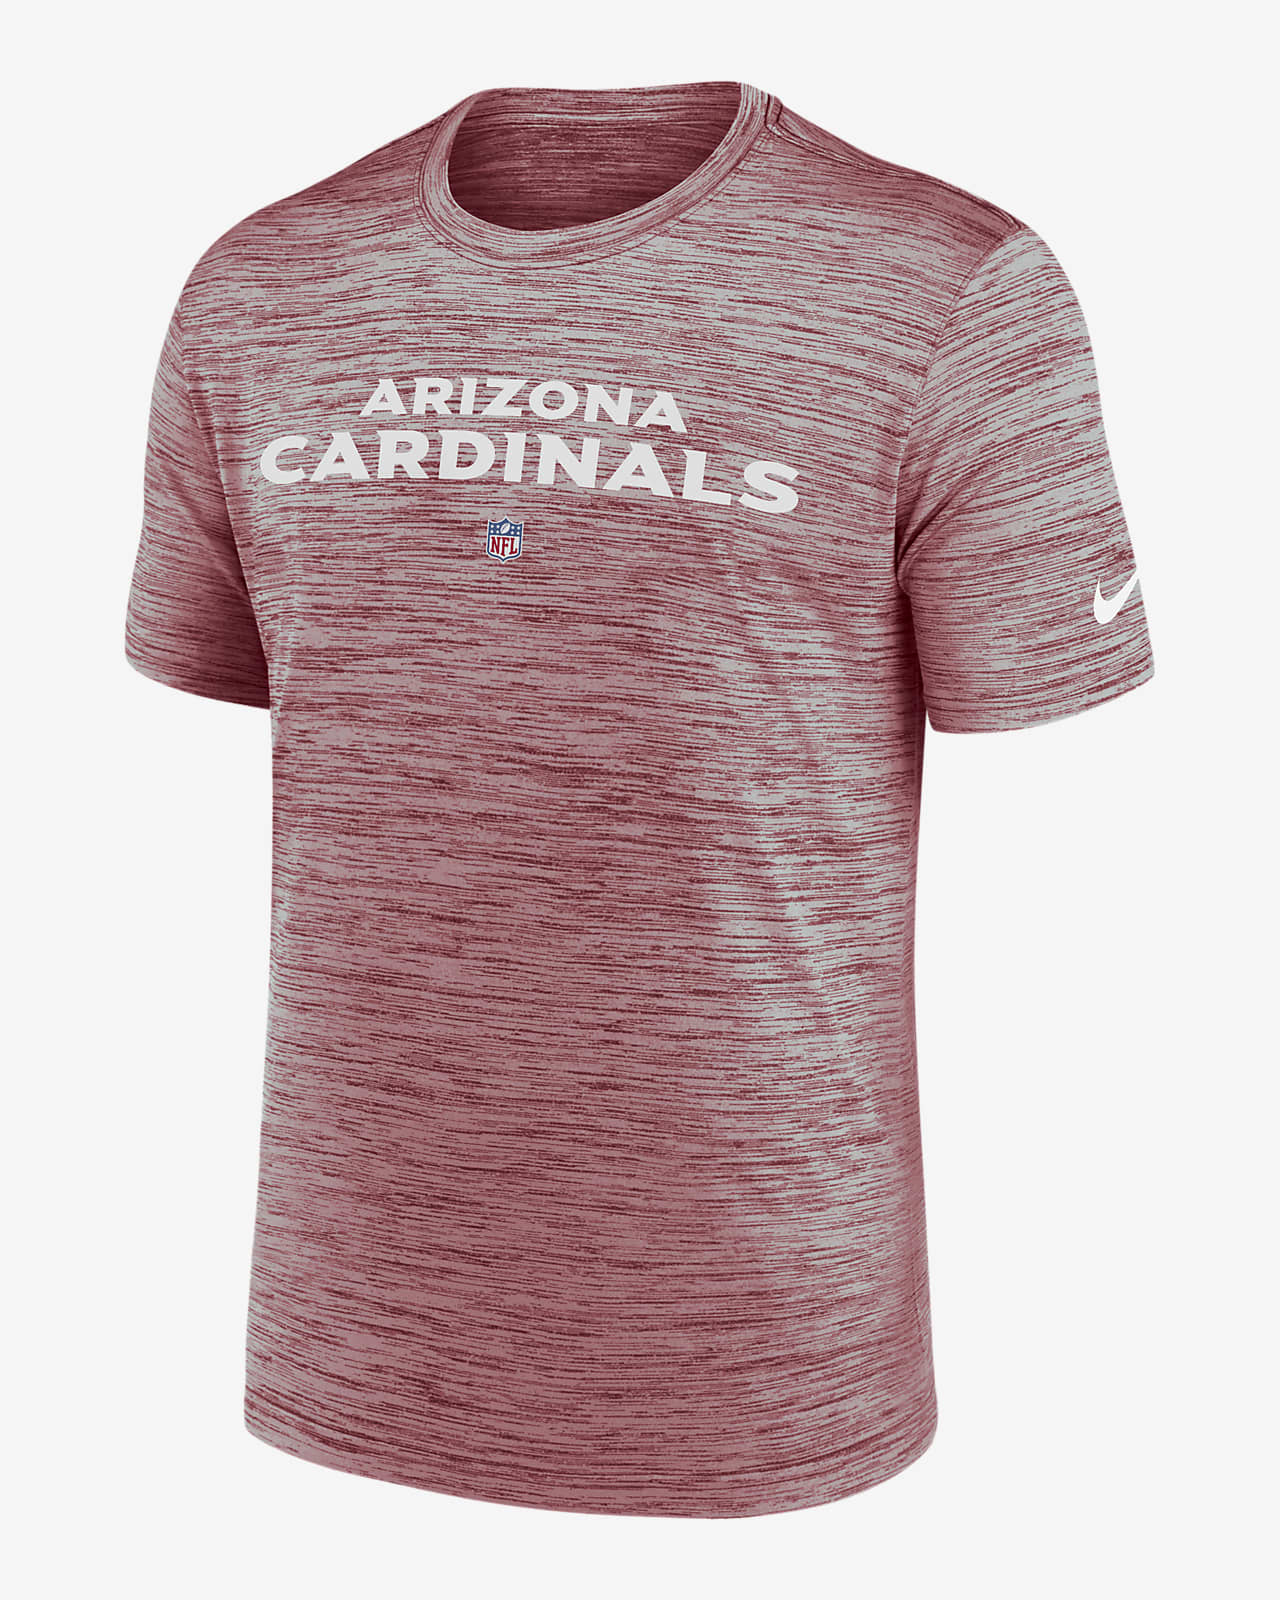 Nike Dri-FIT Sideline Velocity (NFL Arizona Cardinals) Women's T-Shirt.